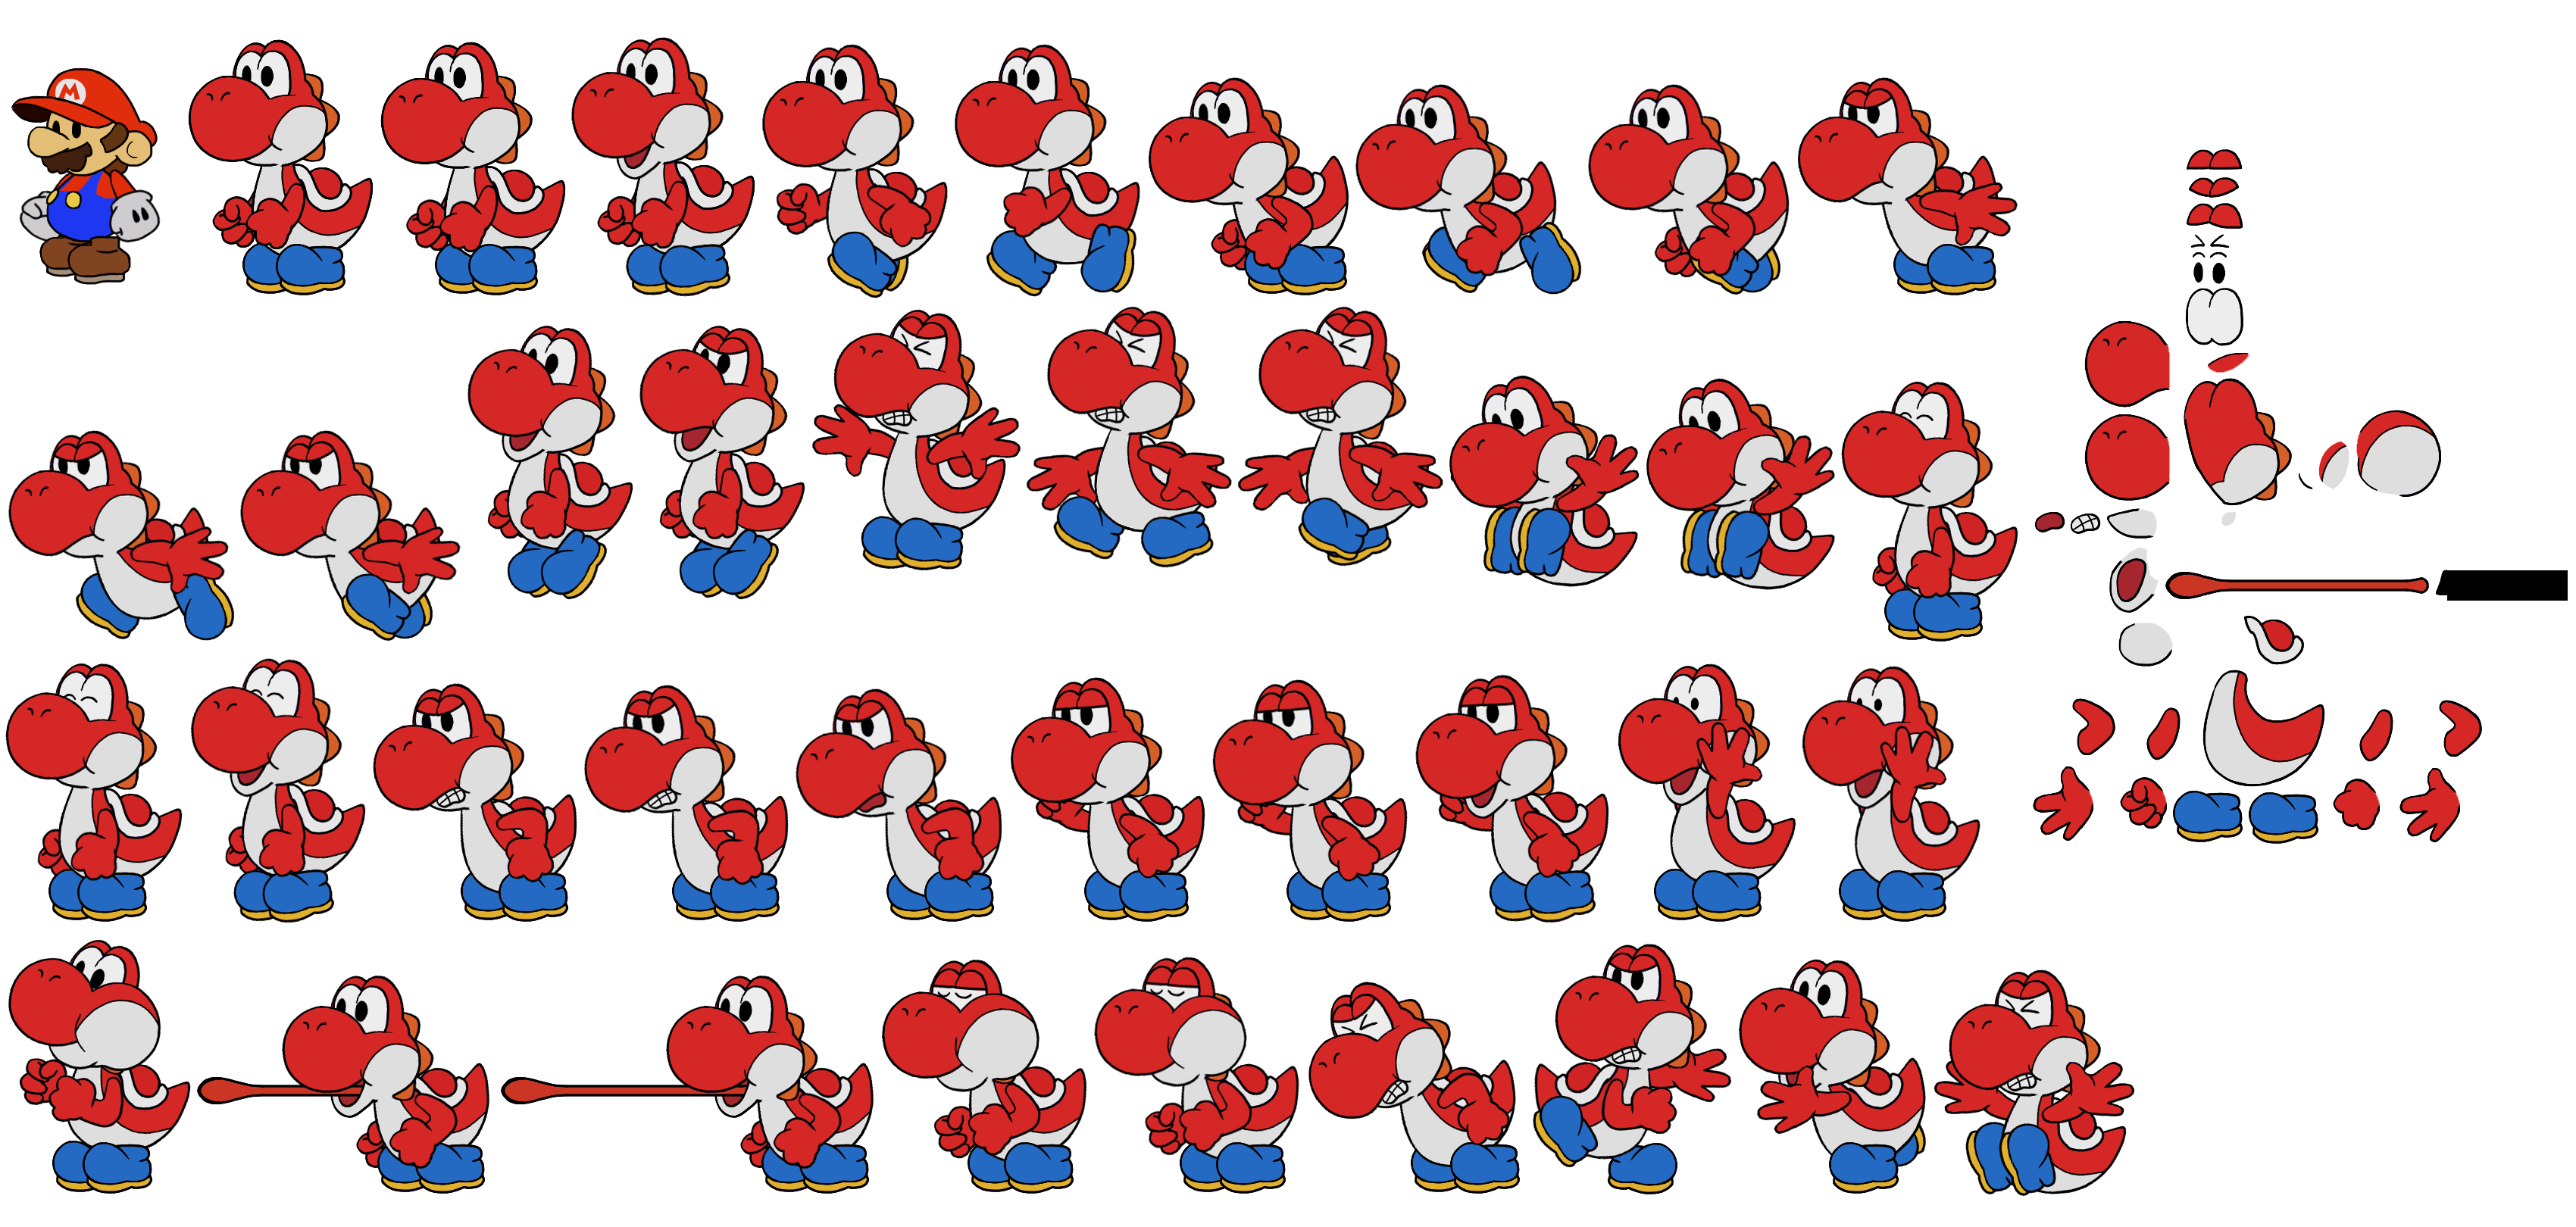 Yoshi Customs - Yoshi (Red) (Paper Mario-Style, Modern)